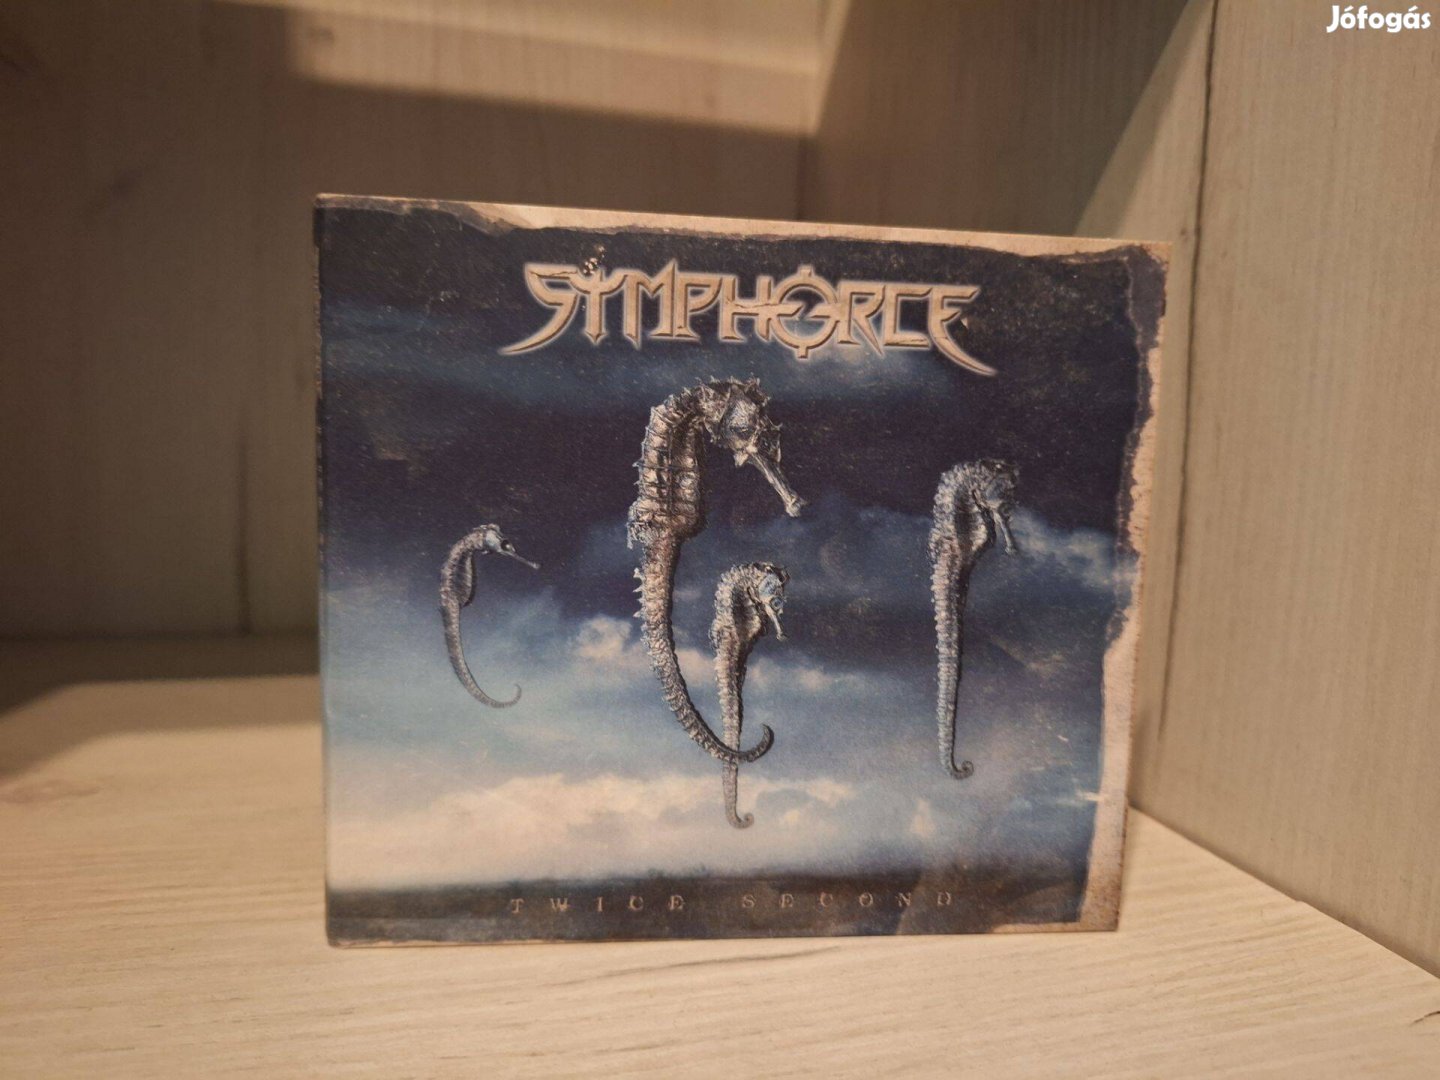 Symphorce - Twice Second CD Limited Edition, Digipak